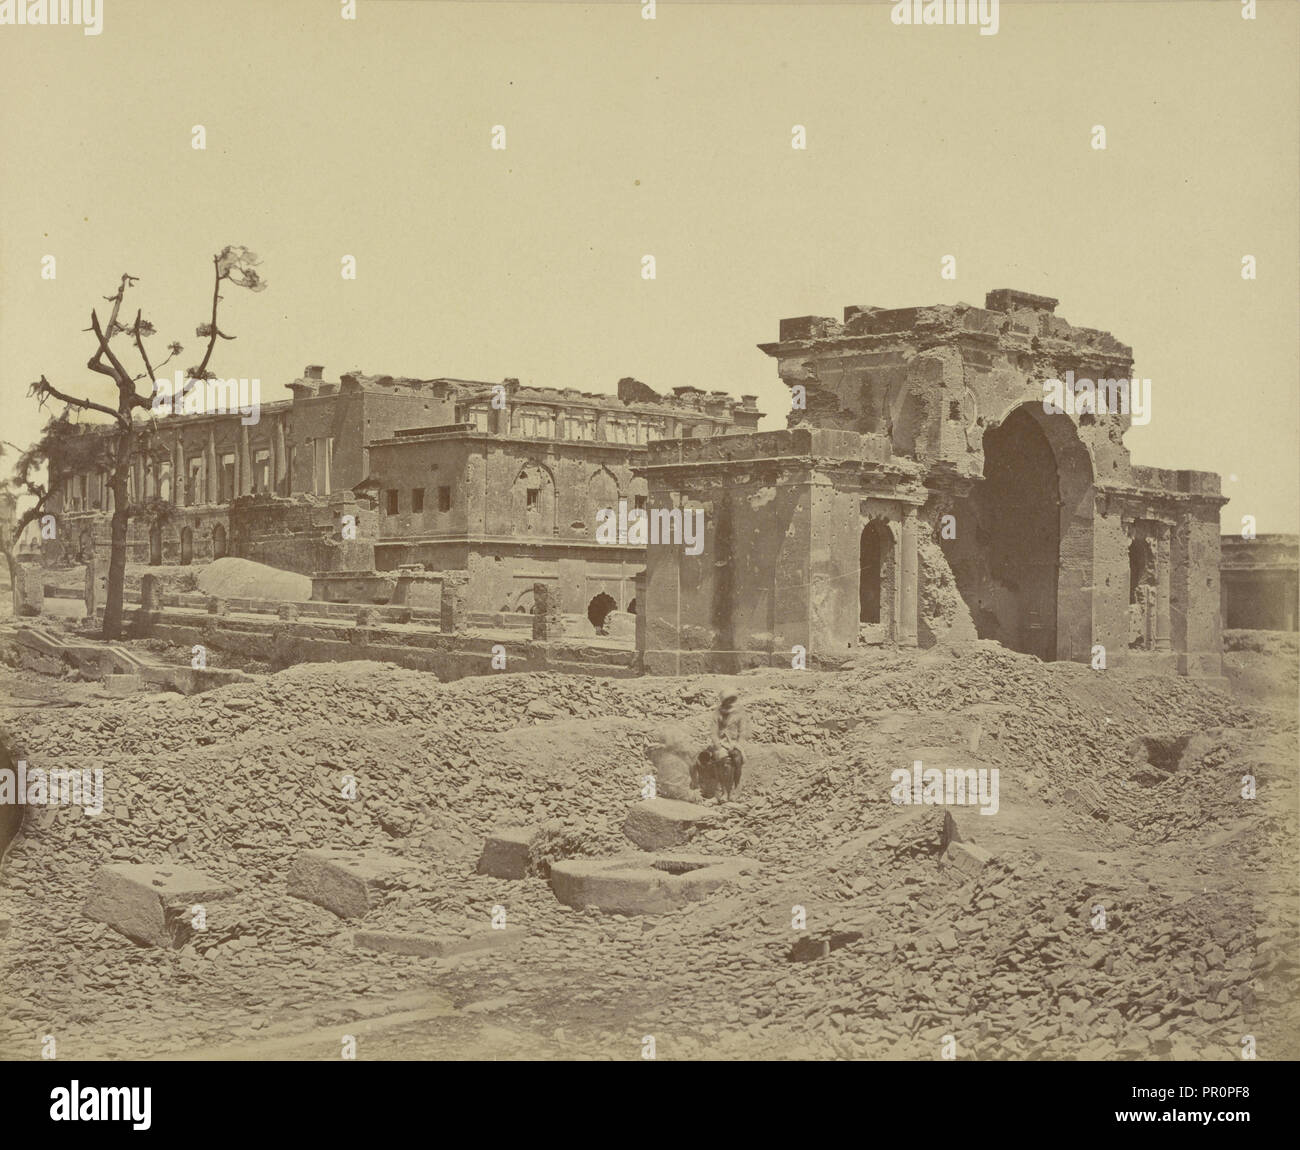 Gateway und Festsaal, Lucknow; Felice Beato, 1832-1909, Lucknow, Uttar Pradesh, Indien; April 1858 Stockfoto